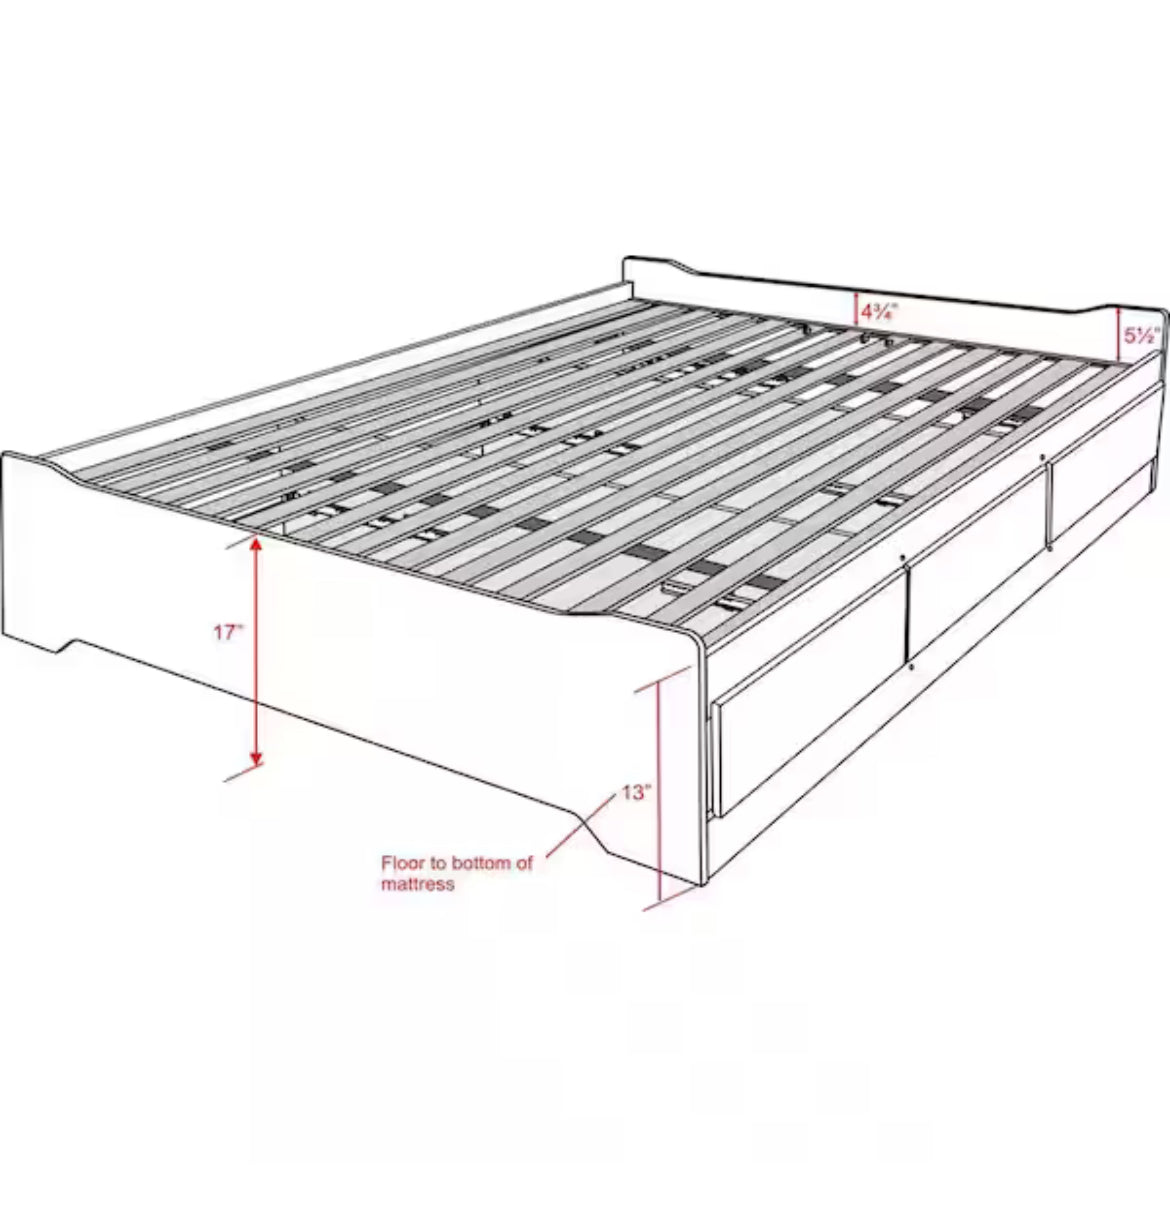 Full Size - Prepac
Fremont Brown Wood Frame Full Platform Bed